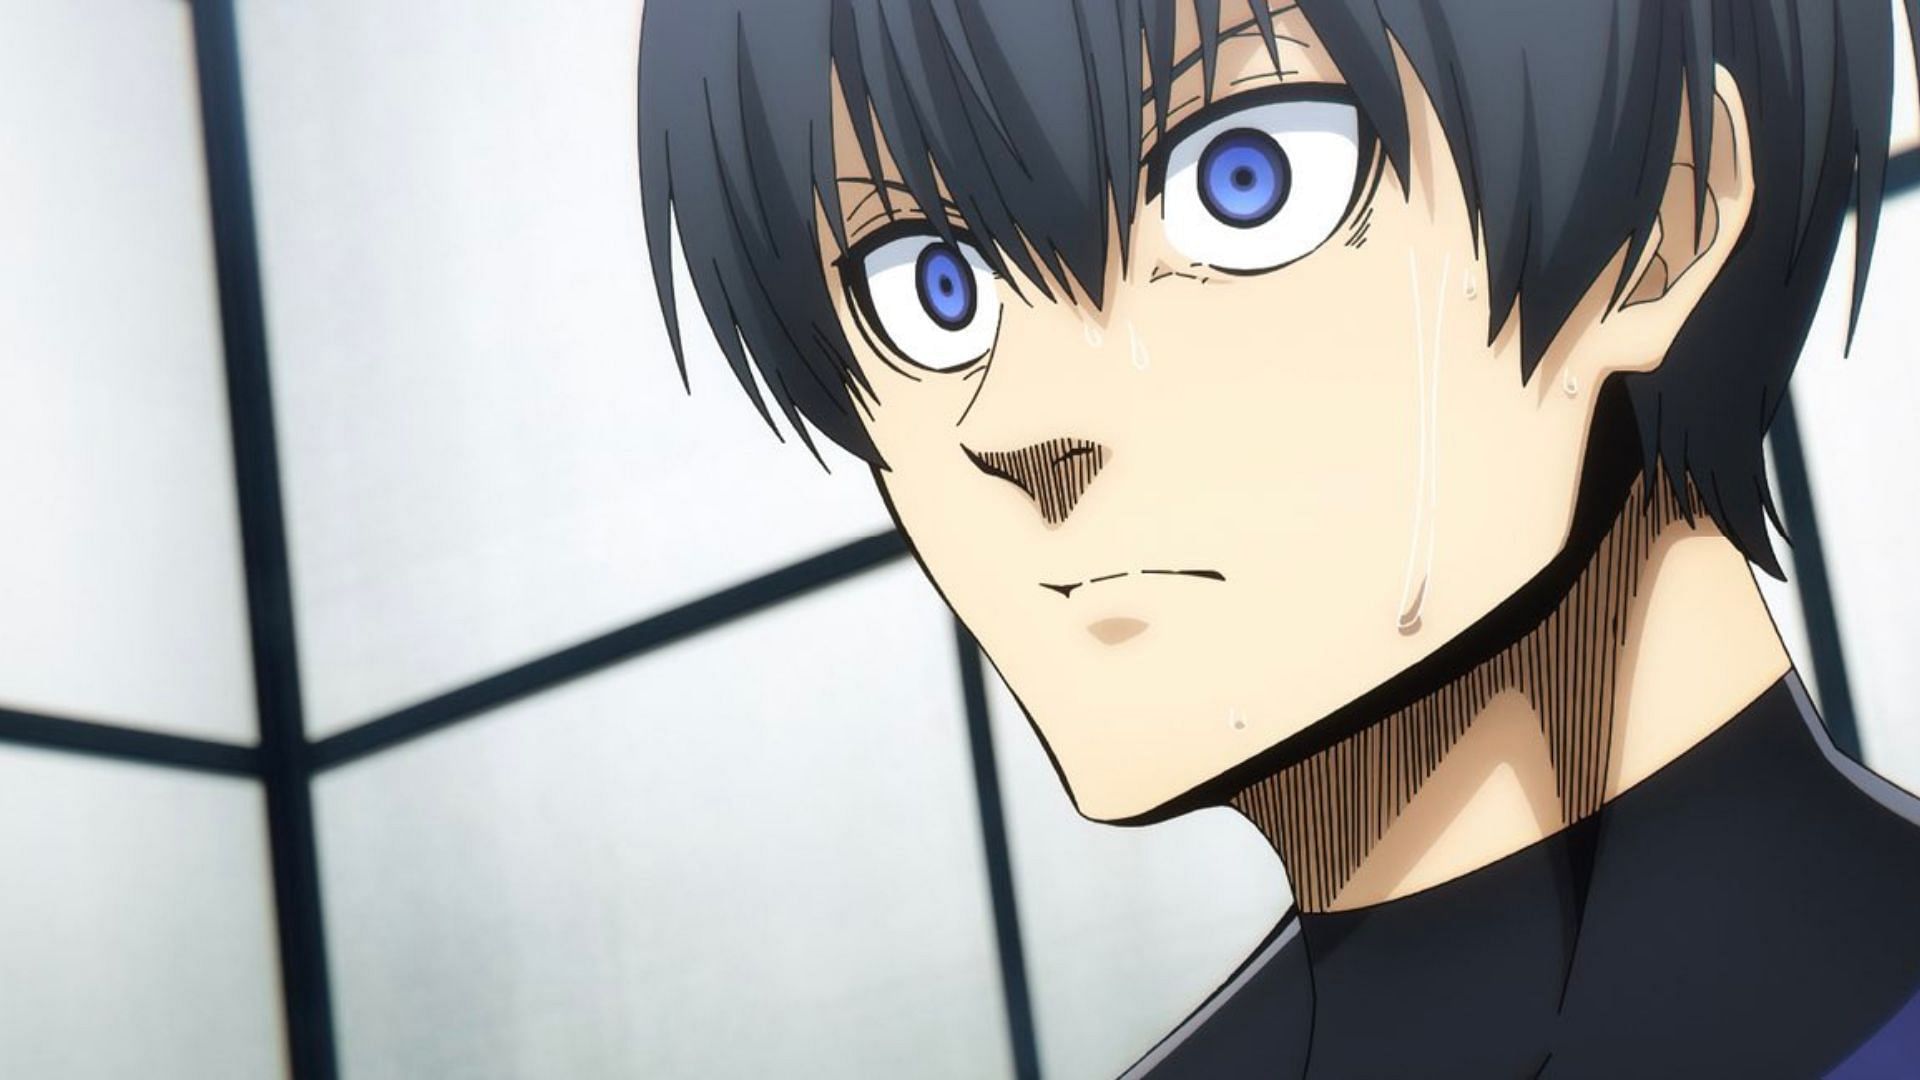 Yoichi Isagi as seen in the anime (Image via 8bit)